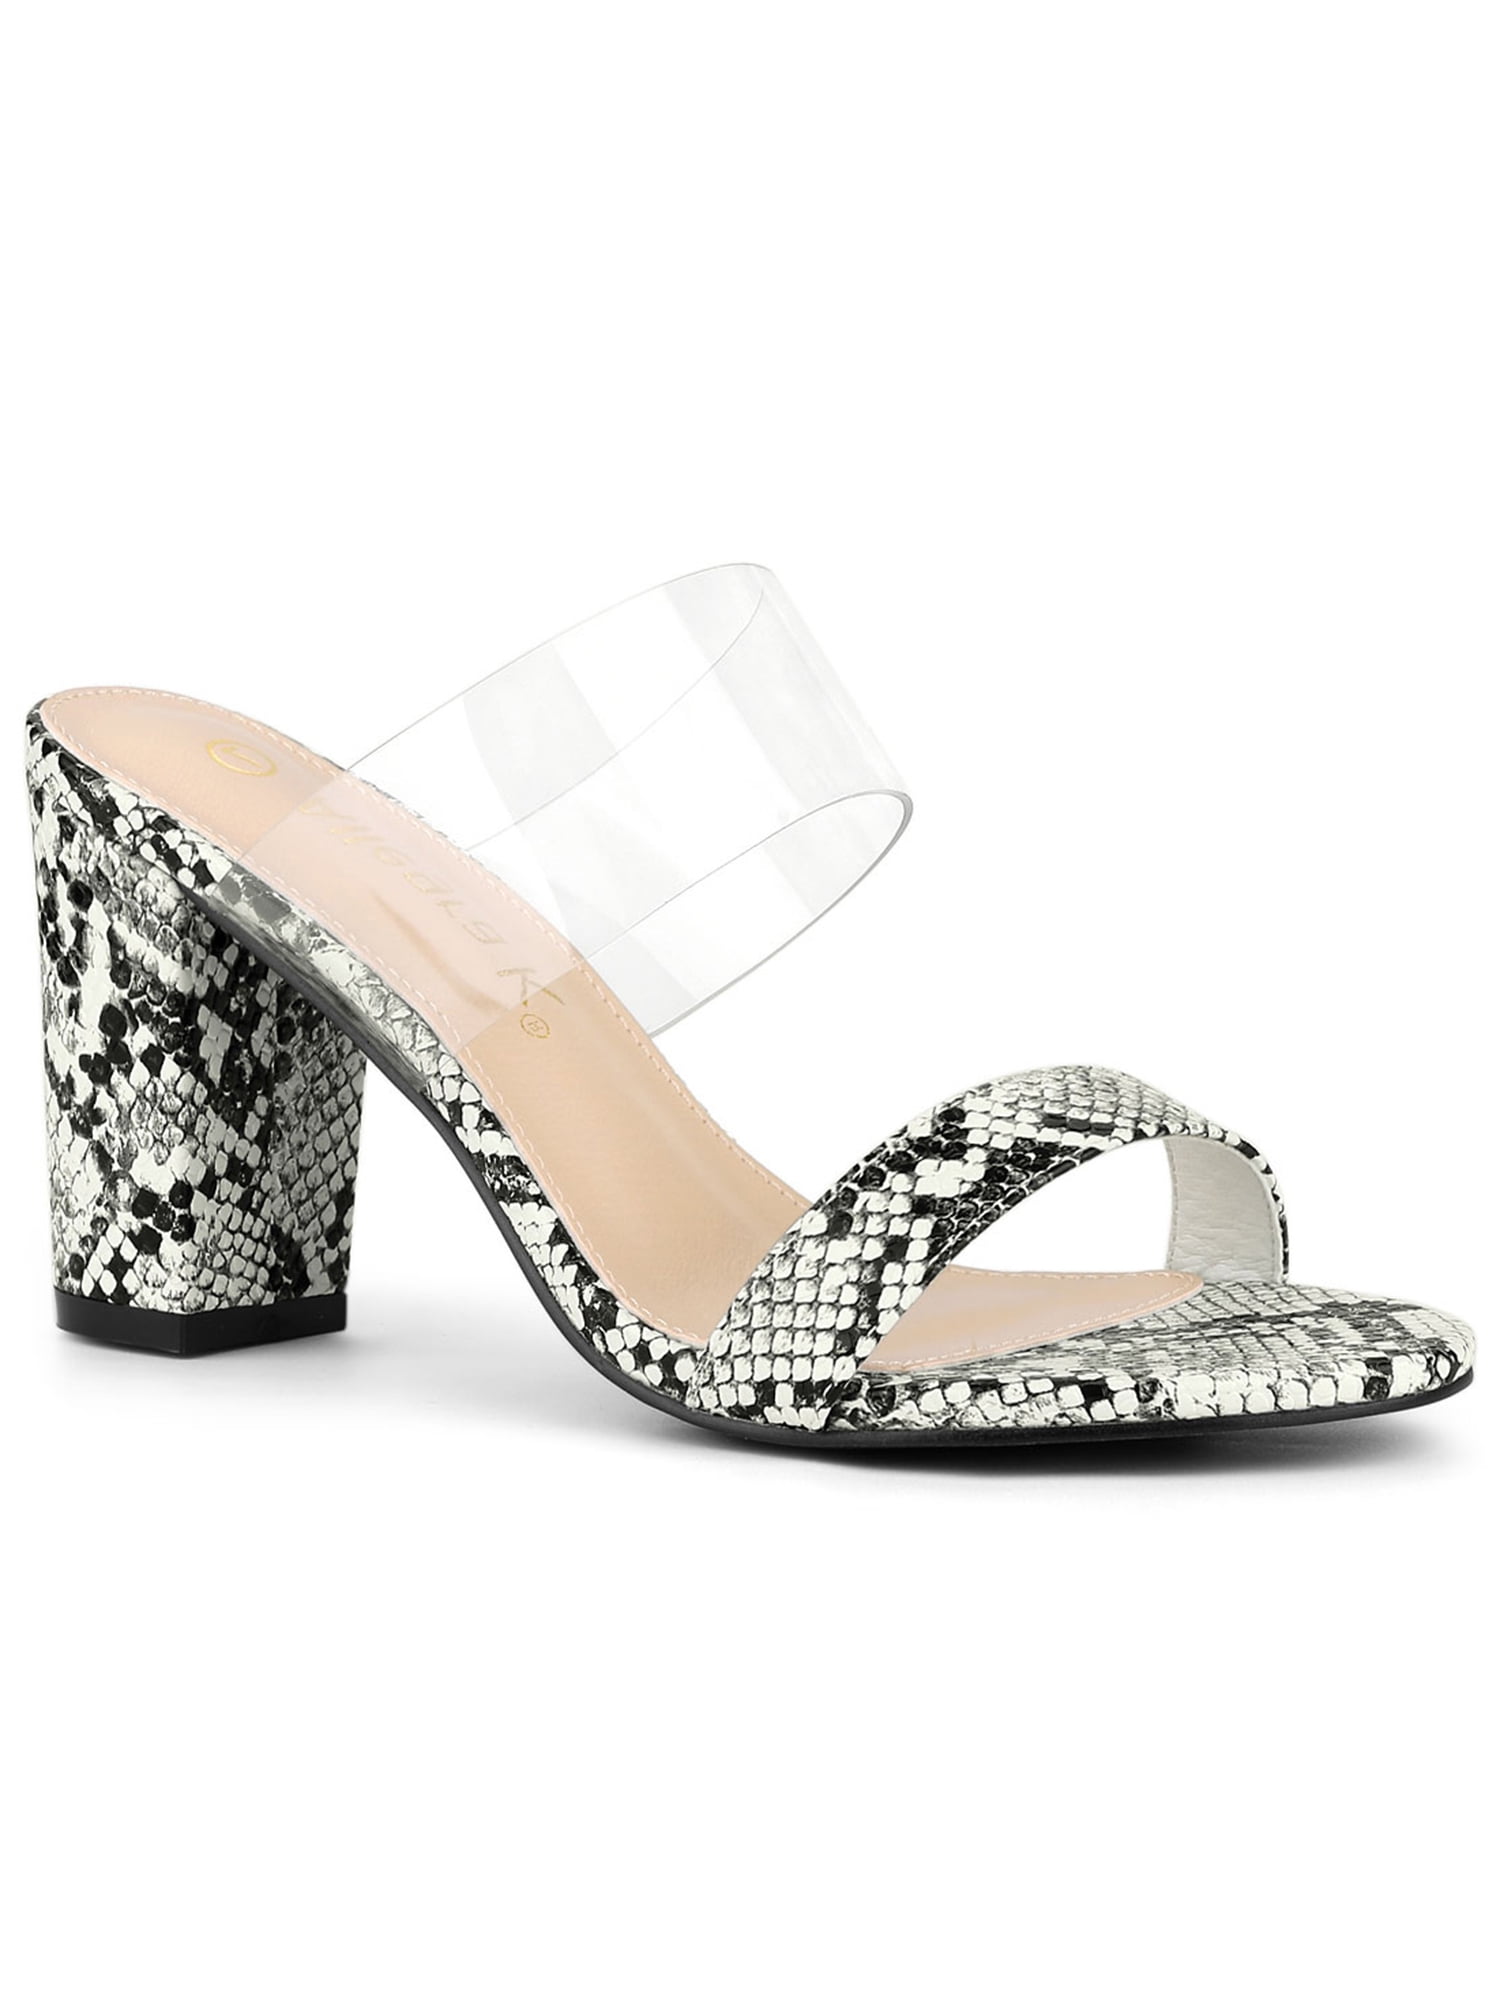 Glamorous ankle strap stiletto sandals in snake print | ASOS